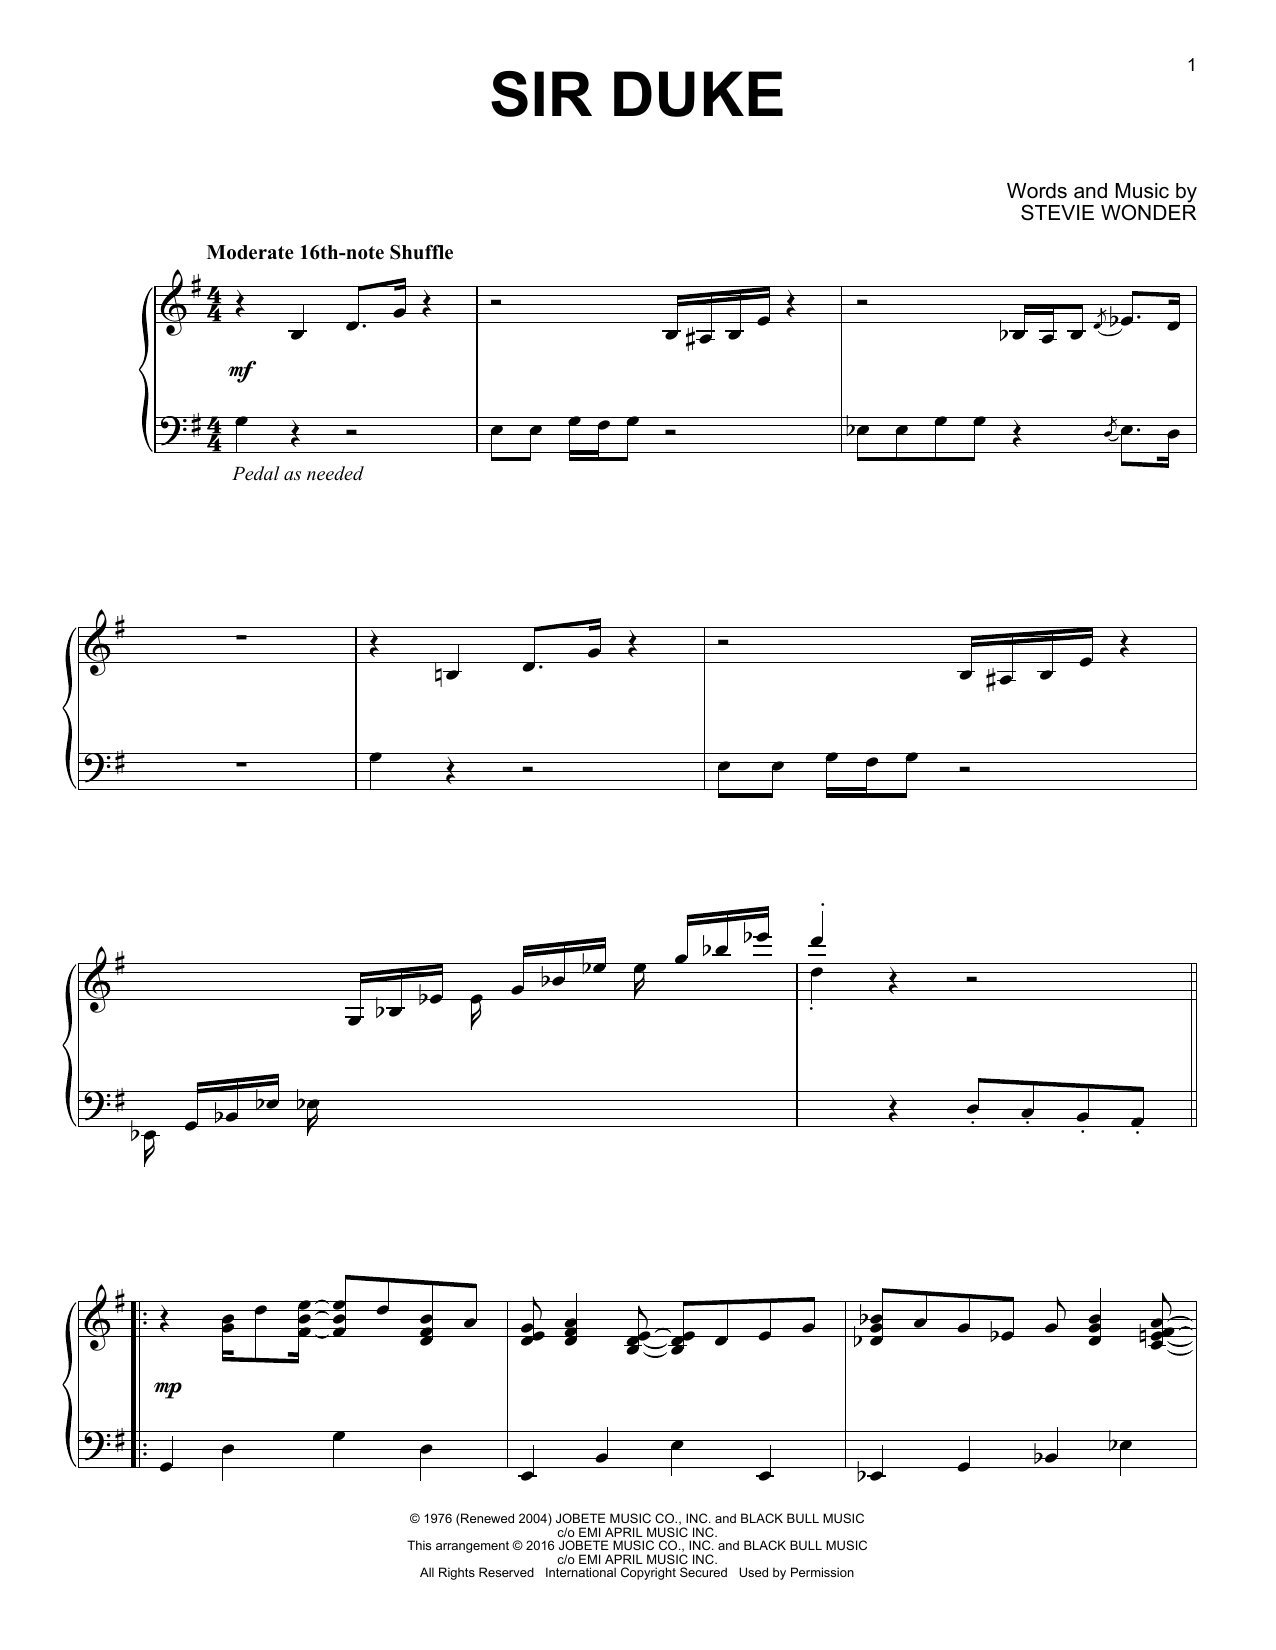 Stevie Wonder Sir Duke [Jazz version] Sheet Music Notes & Chords for Piano - Download or Print PDF